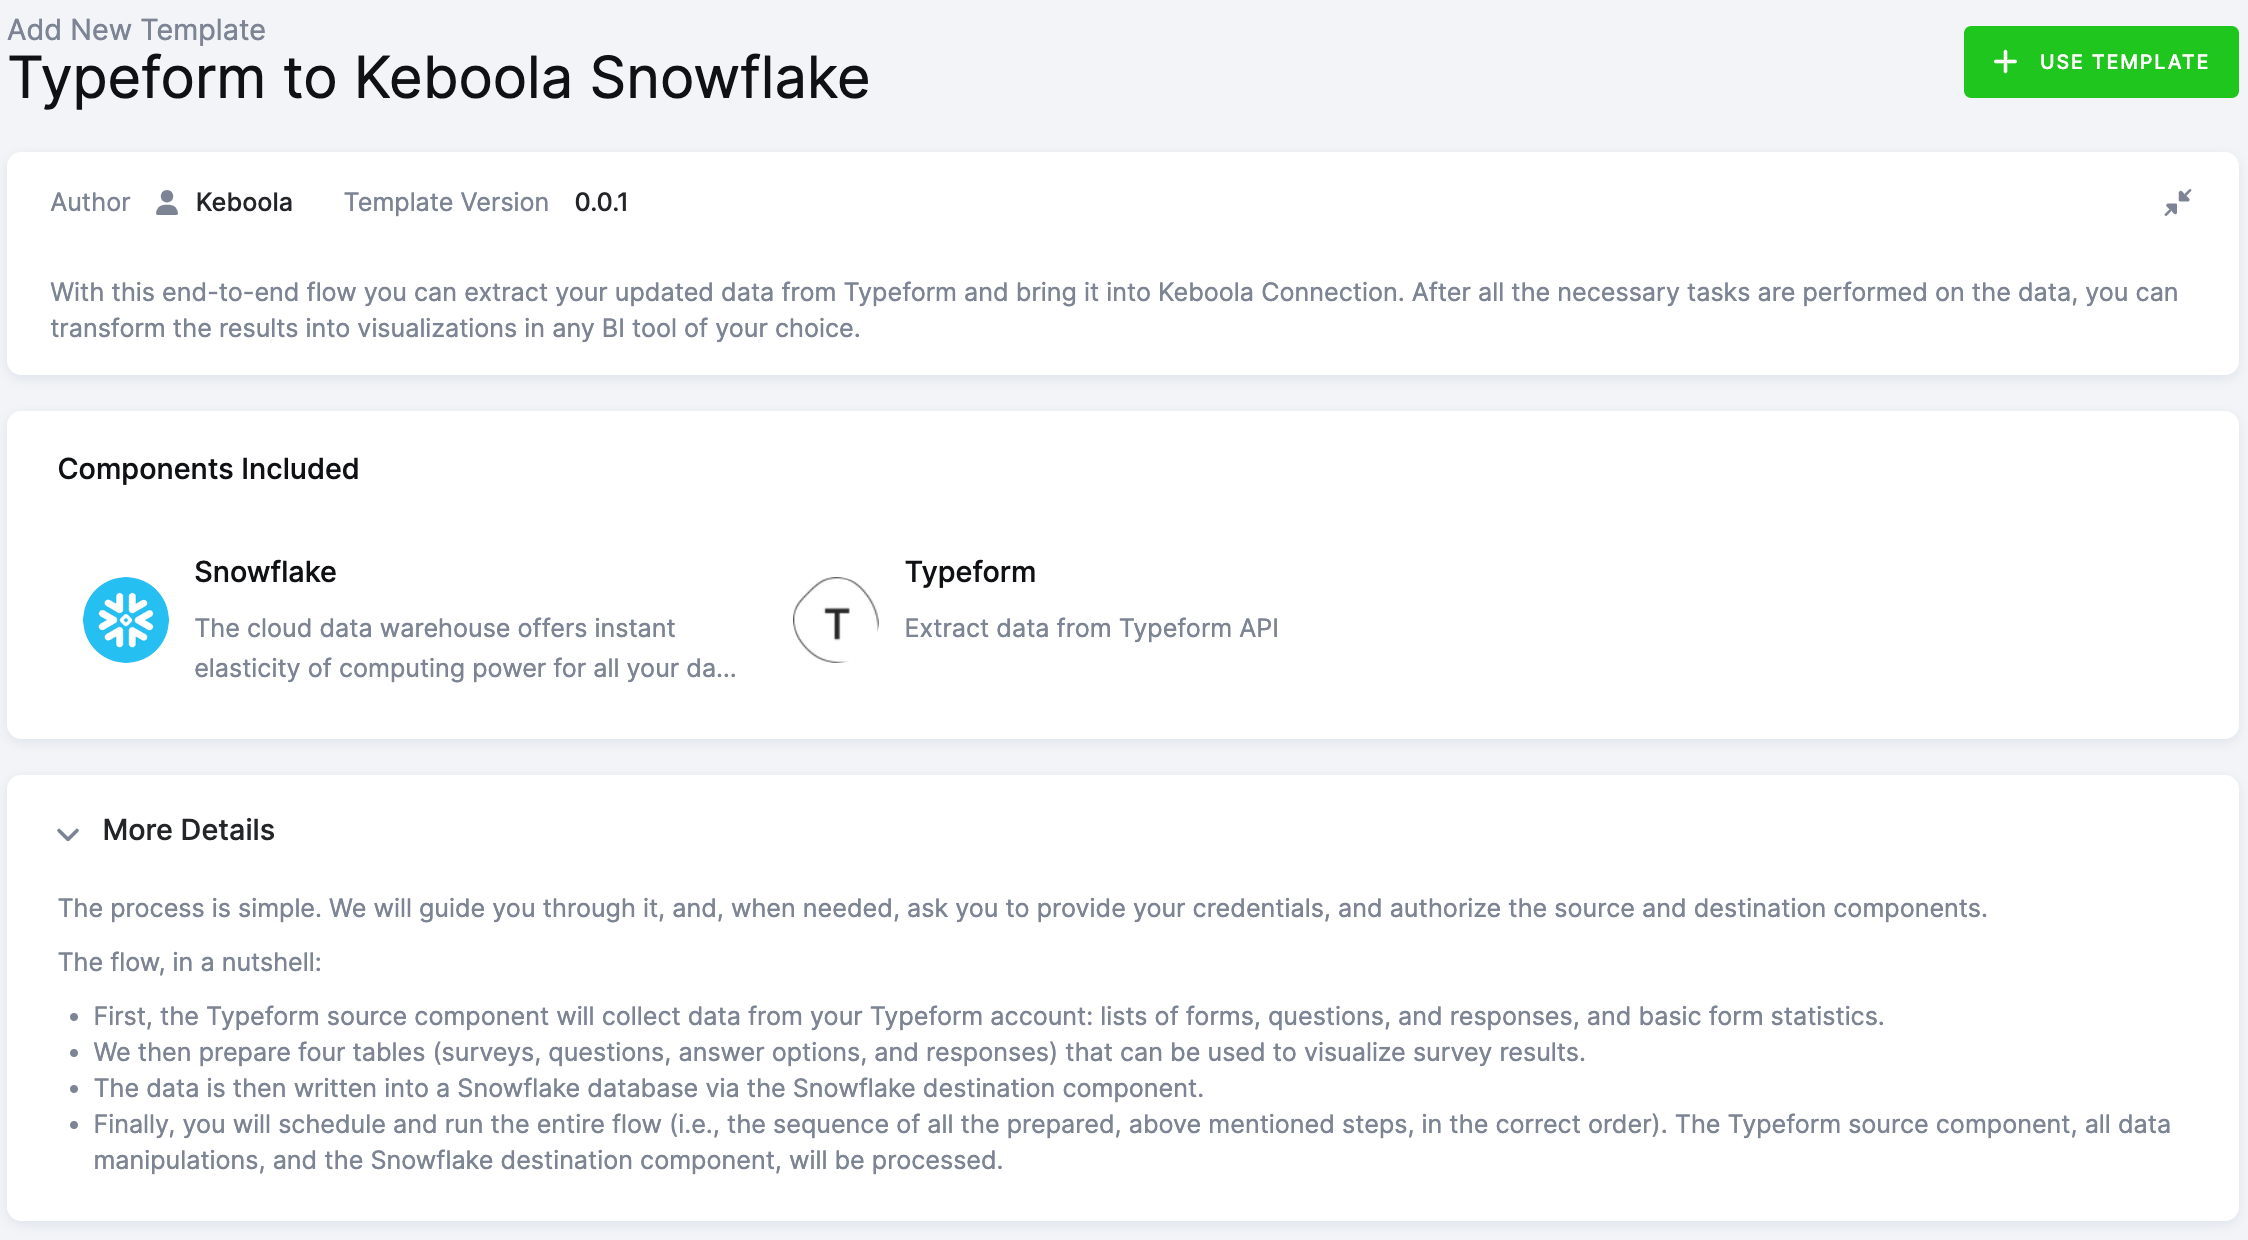 Add Typeform to Snowflake